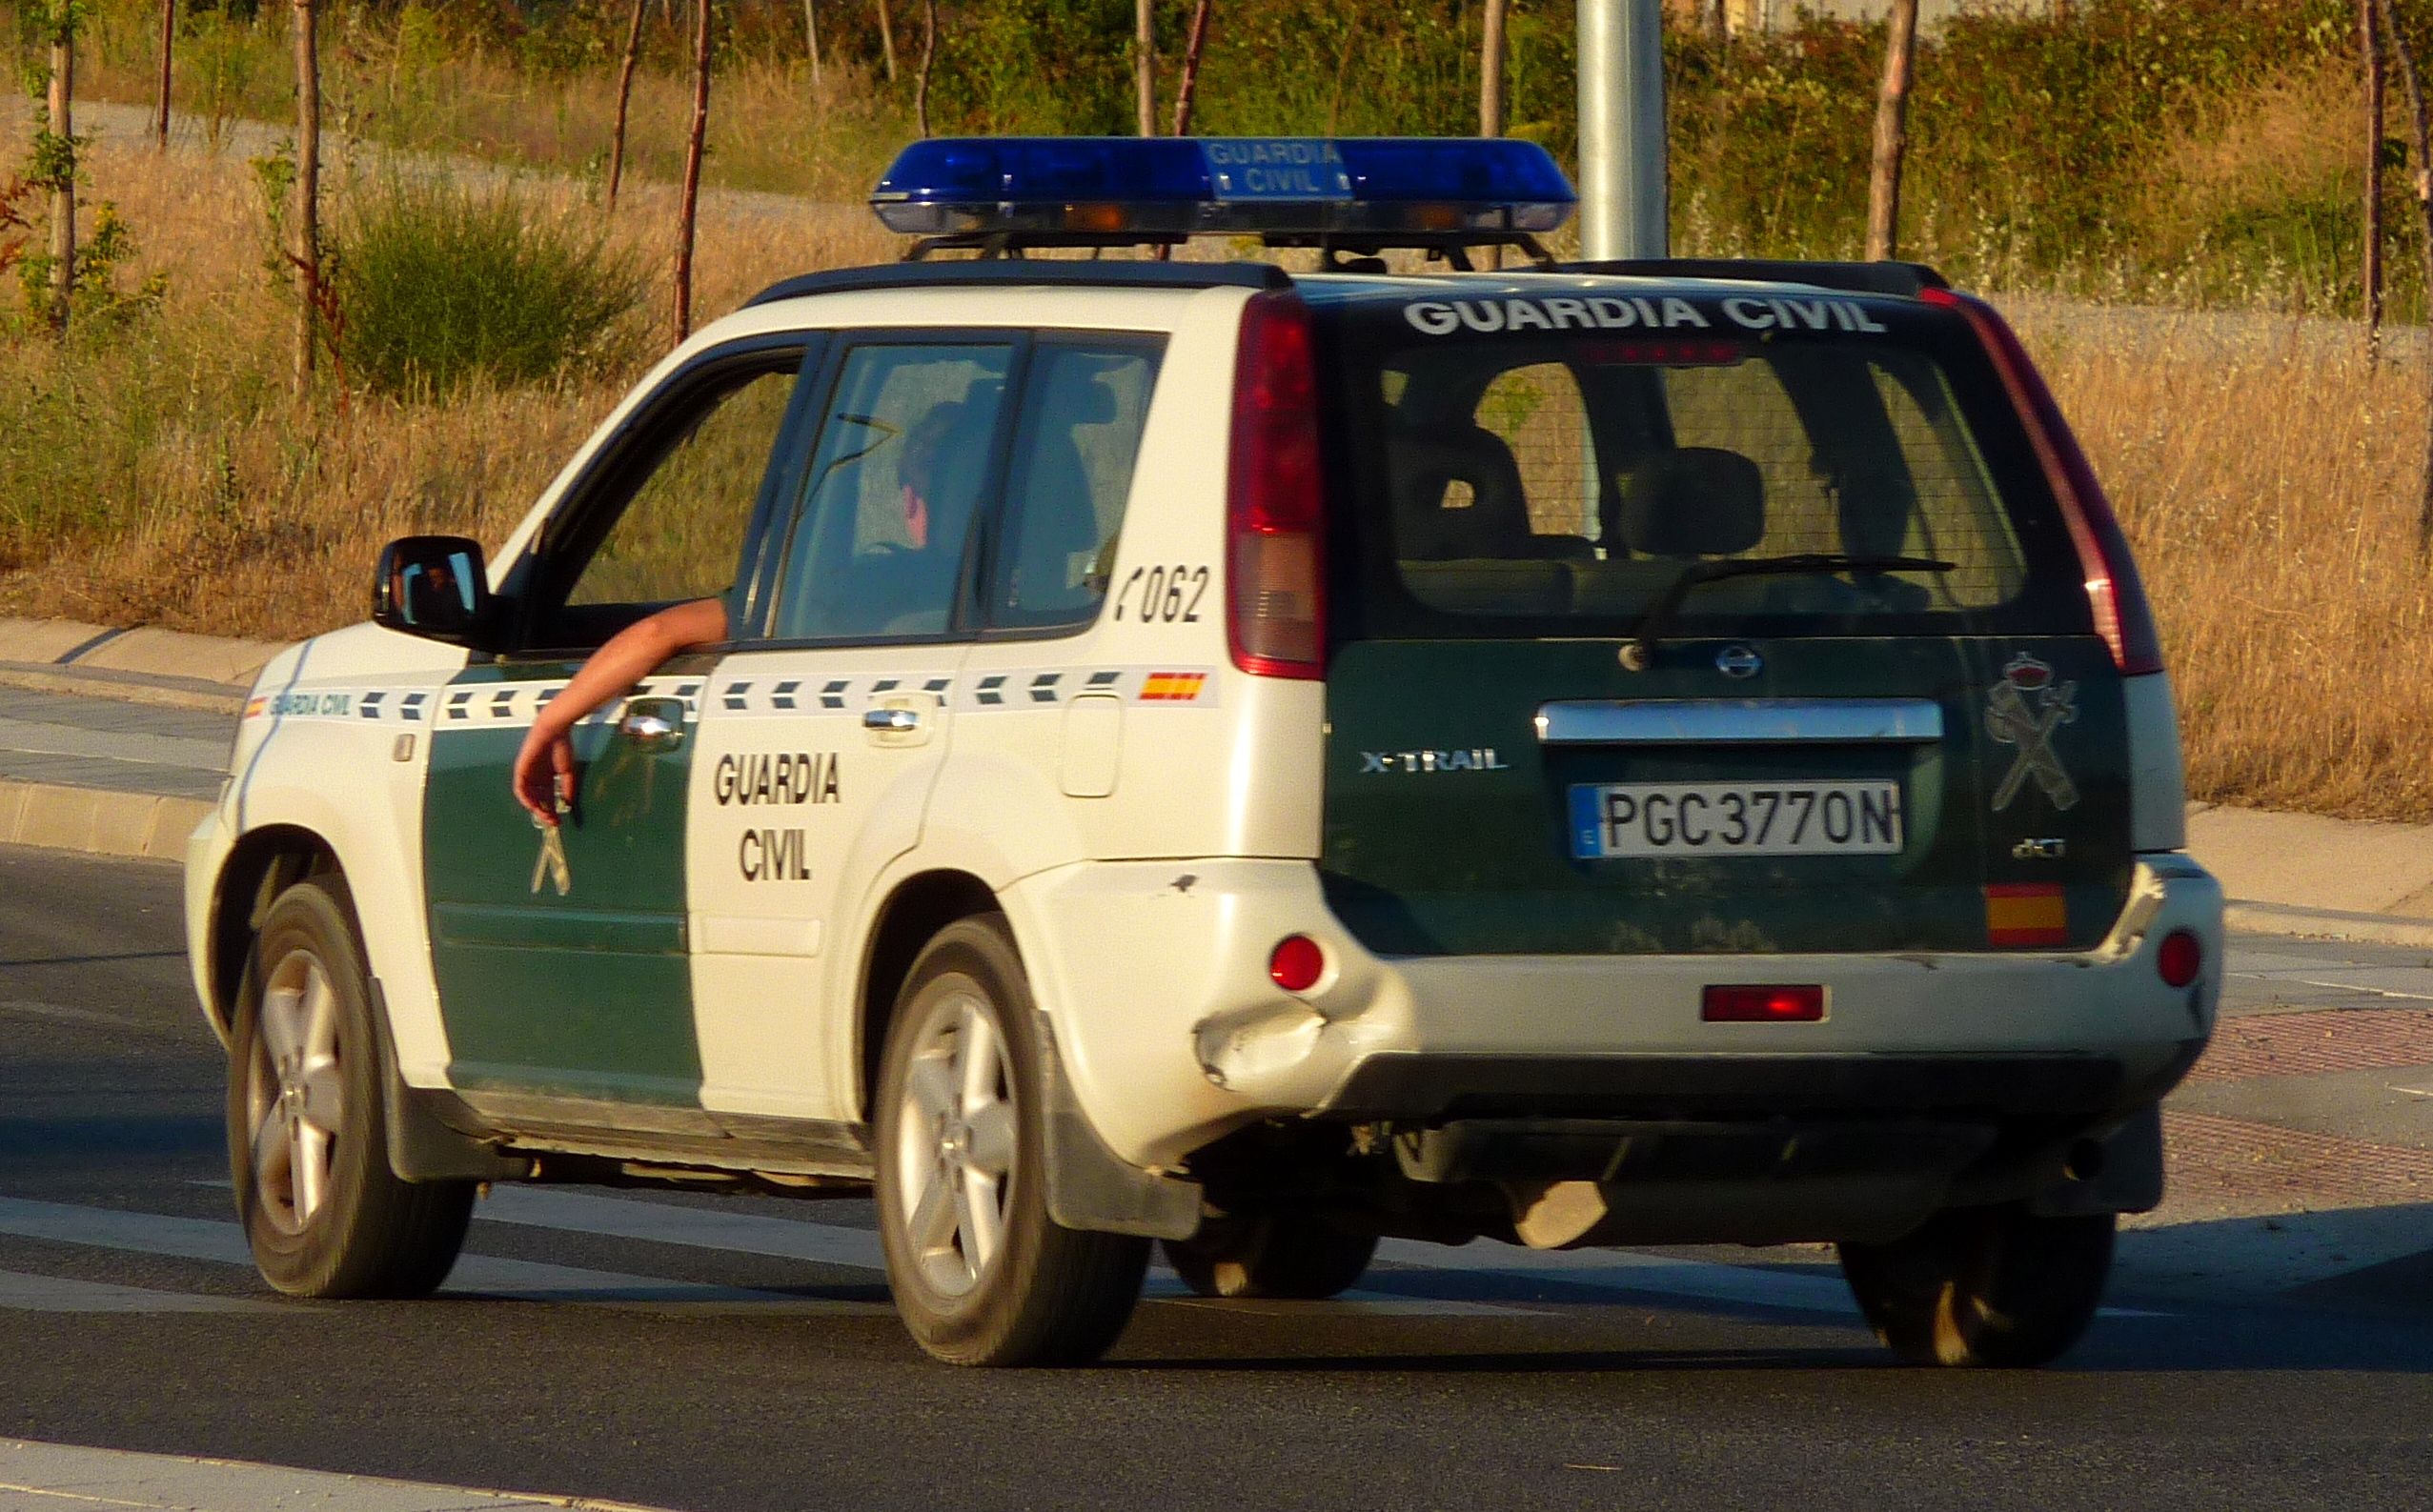 Guàrdia Civil identifica al vehicle infractor / Wikimedia Commons